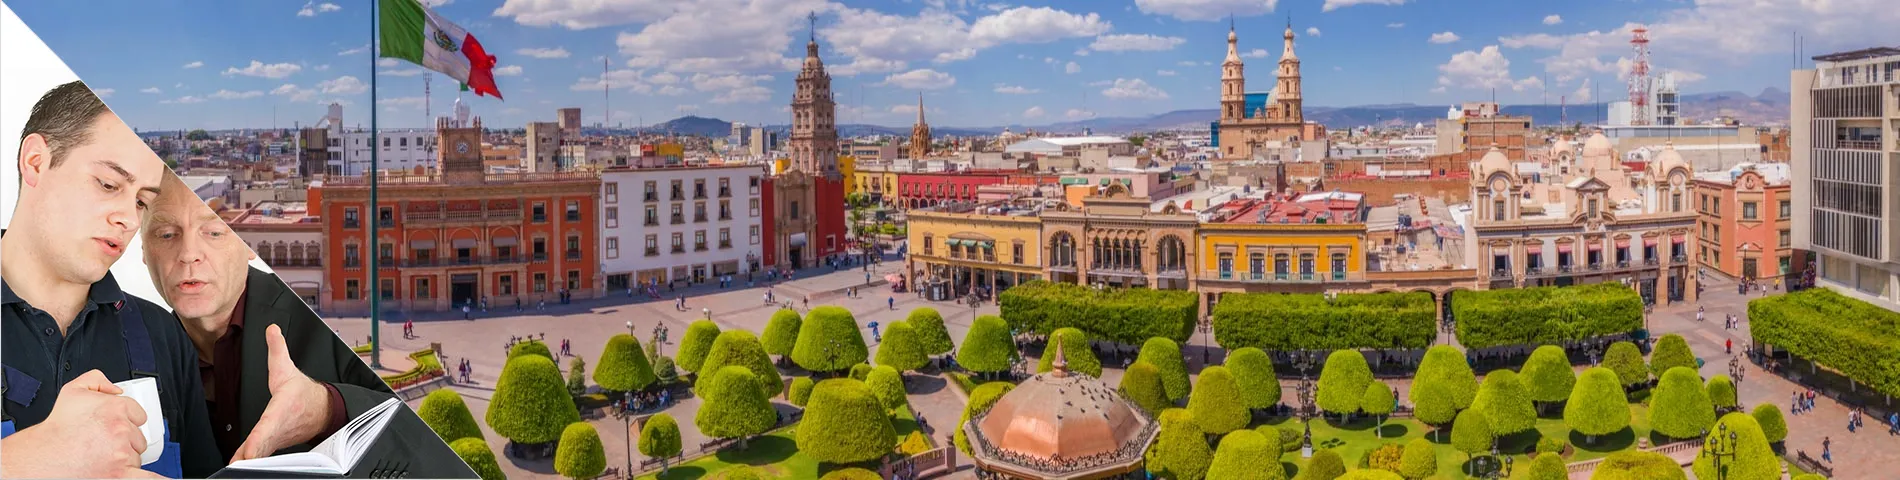 Guanajuato - Výuka jeden na jednoho